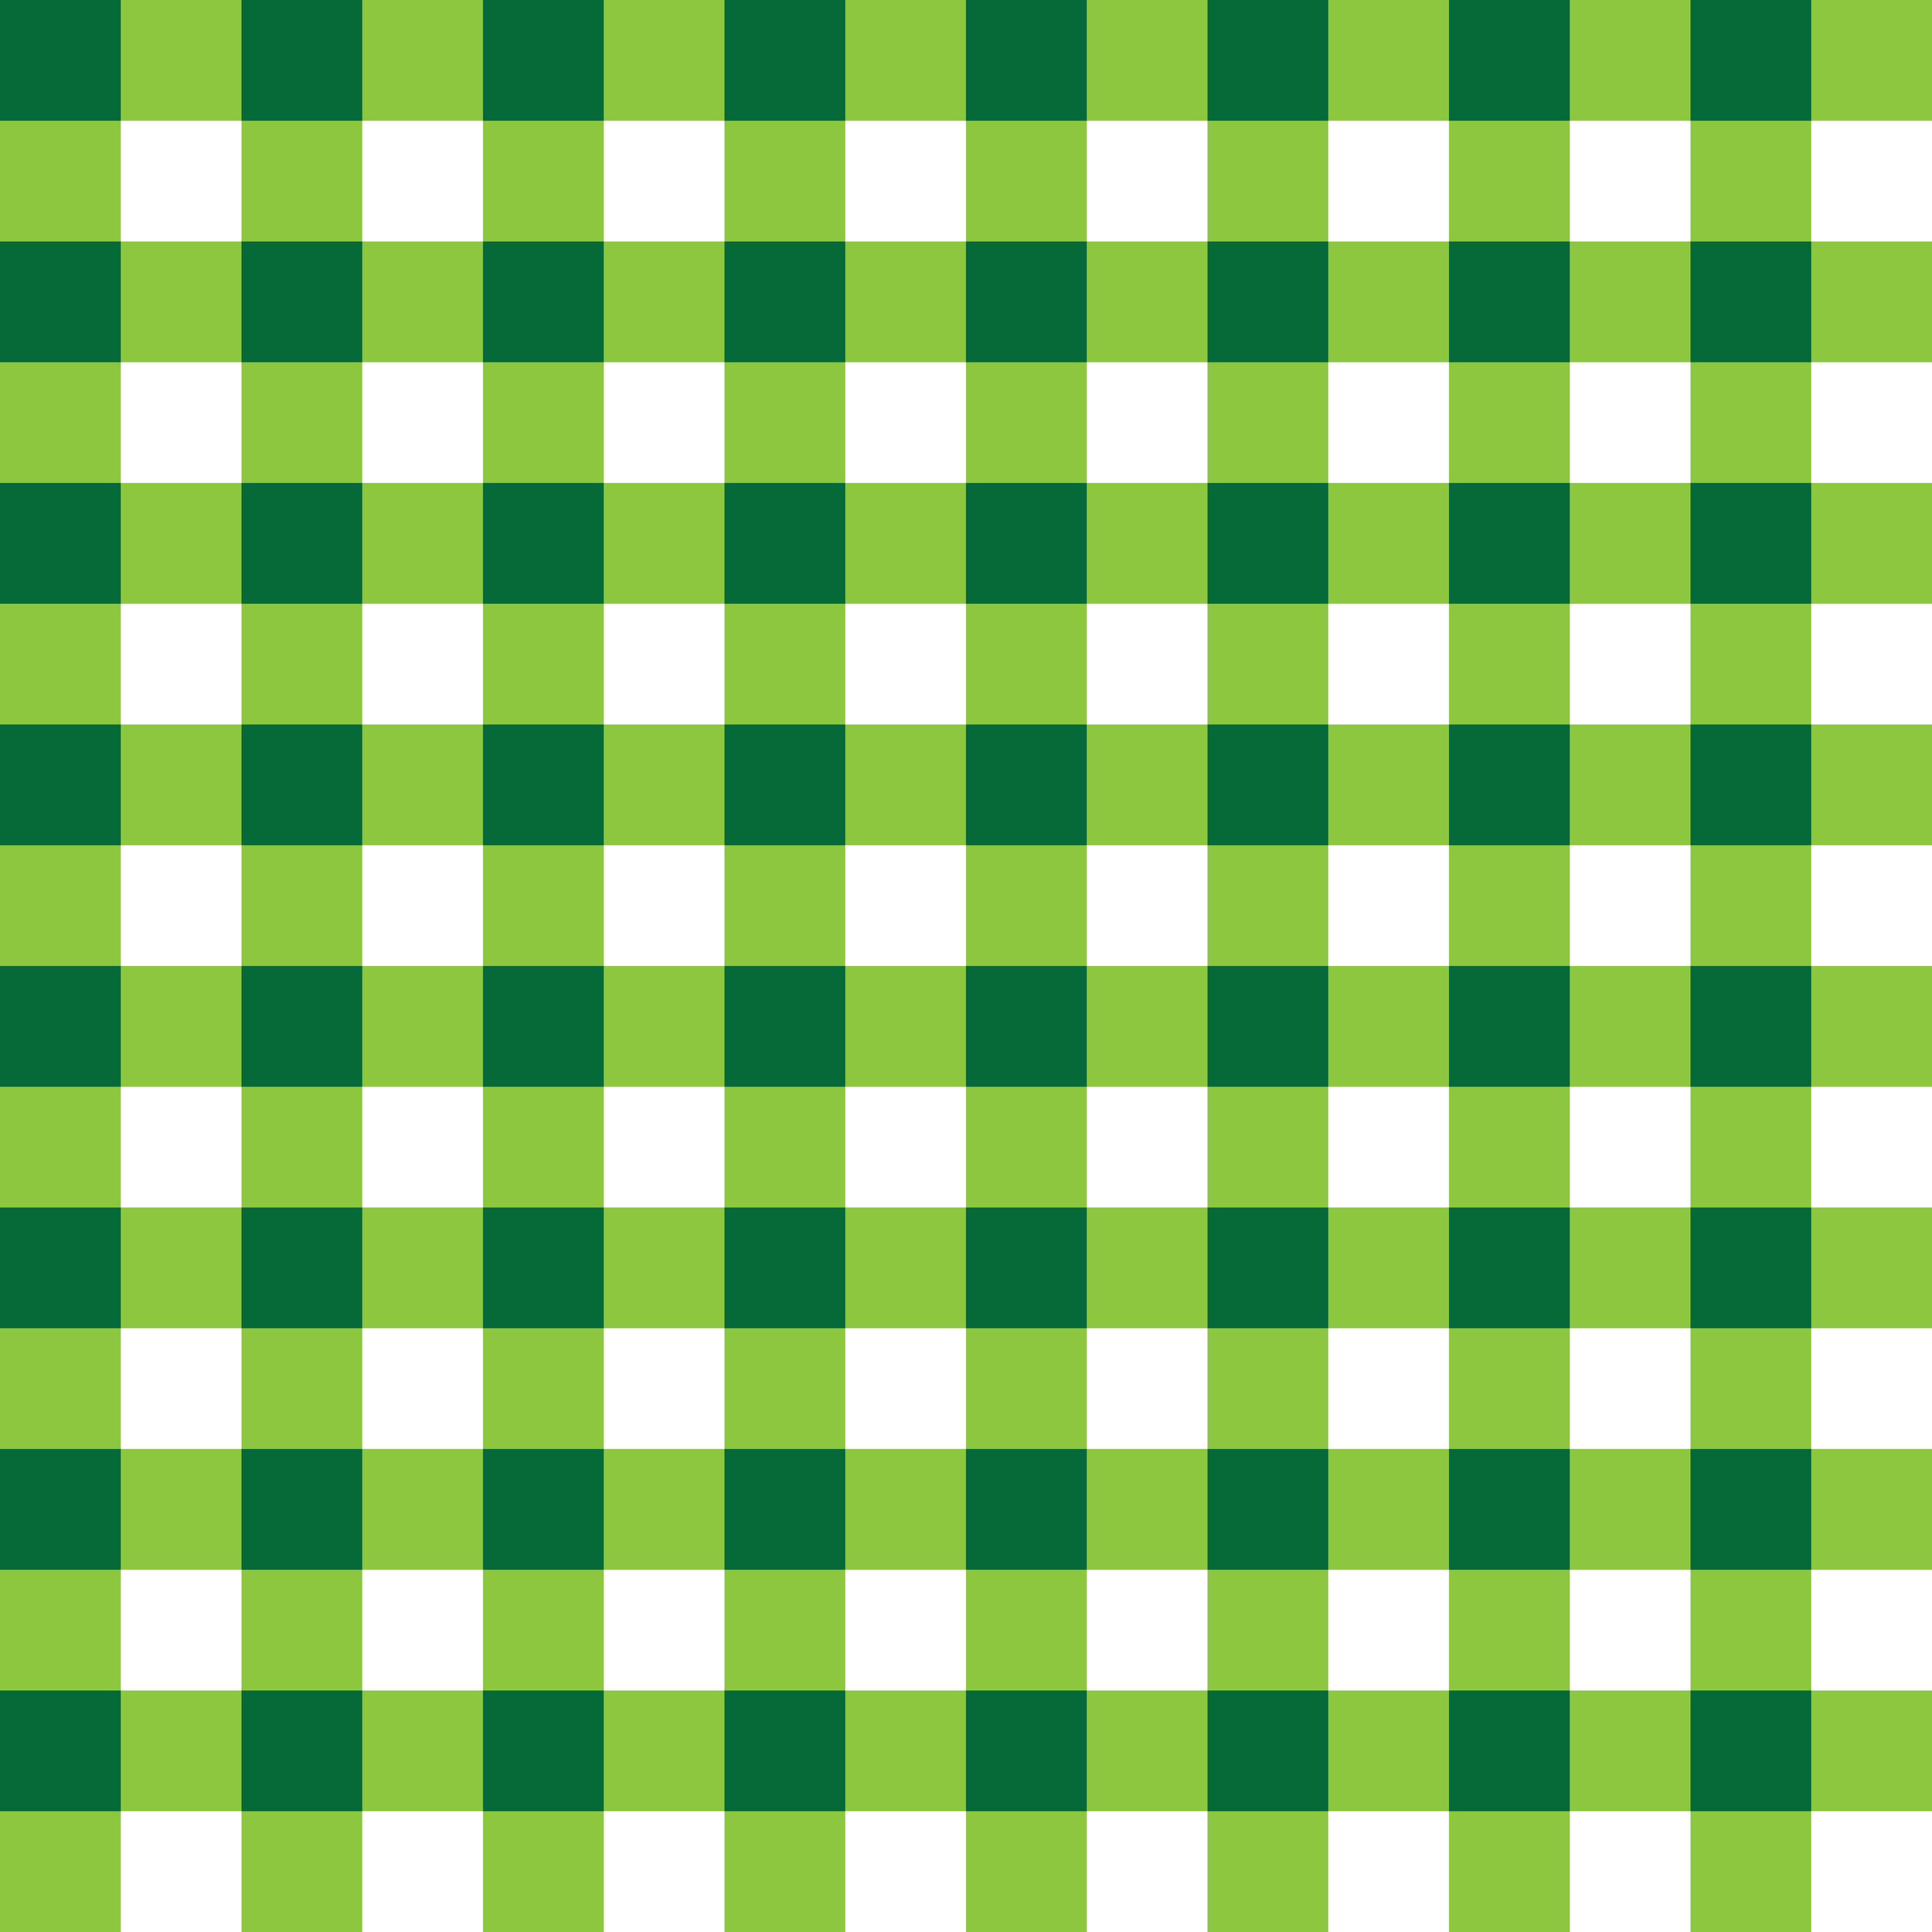 Padrão de tecido xadrez verde escuro e verde claro 640144 Vetor no Vecteezy